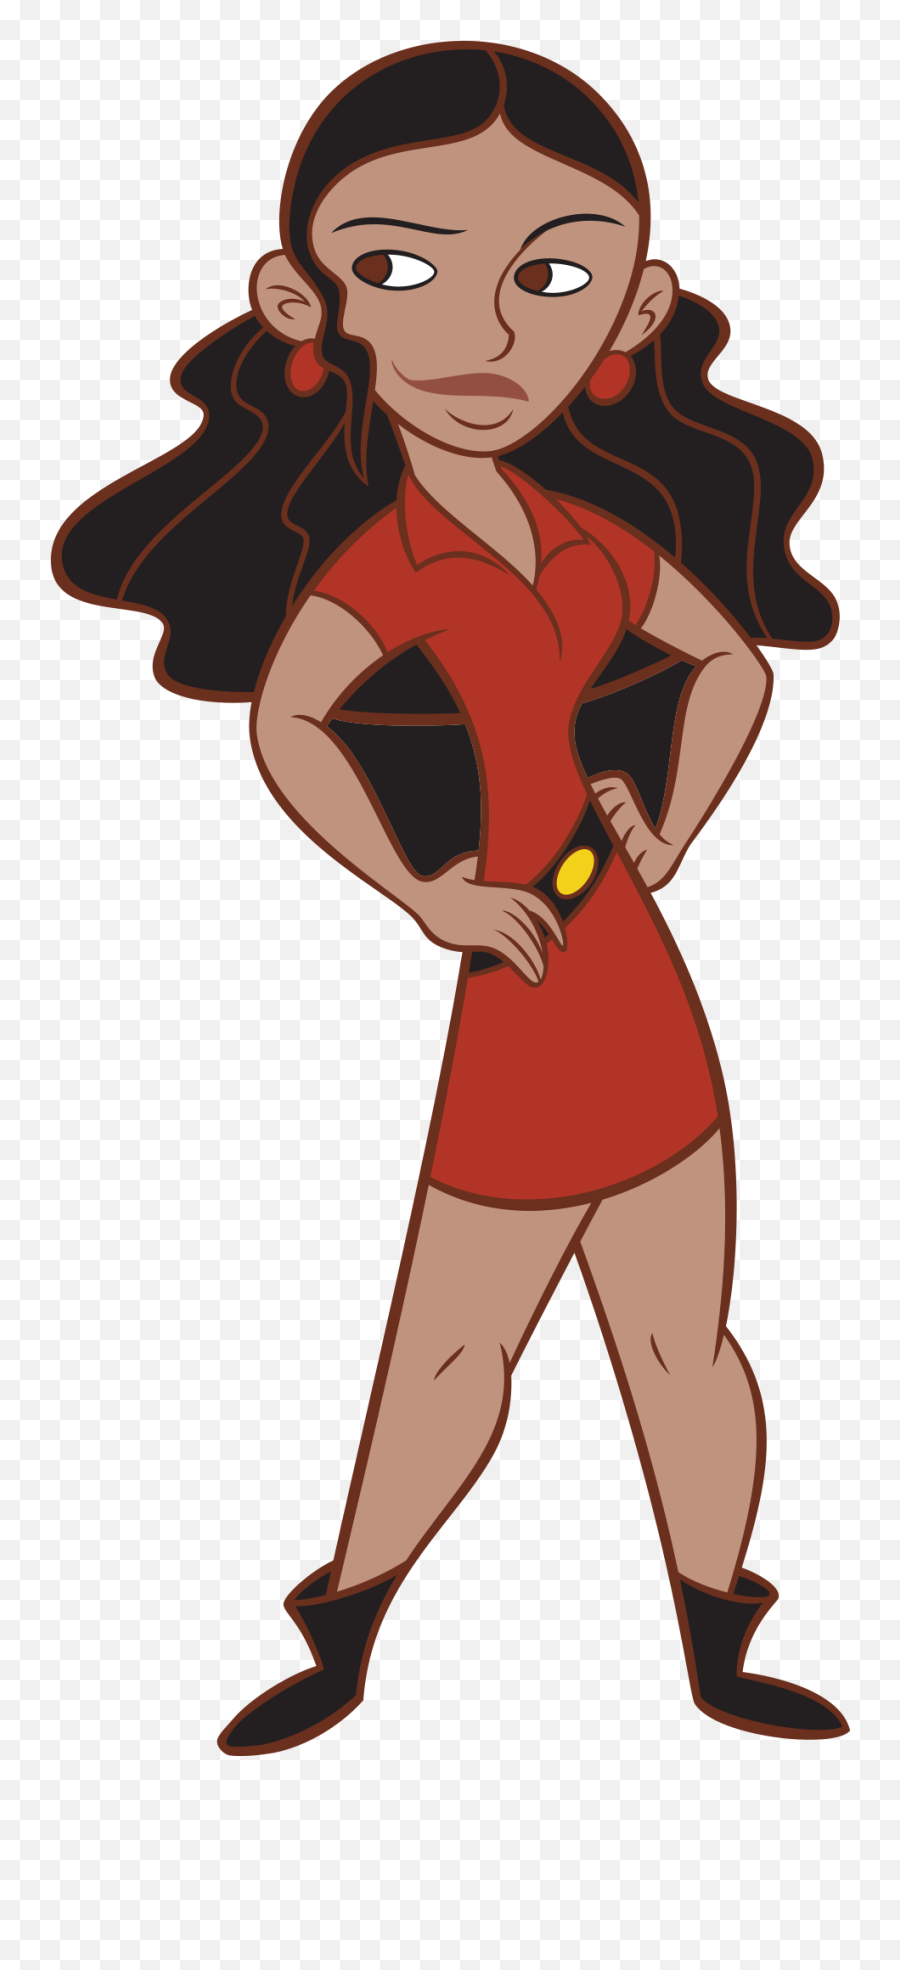 Black Girl Cartoon Characters We Can All Relate To U2014 Blk Emoji,African American Girl Clipart